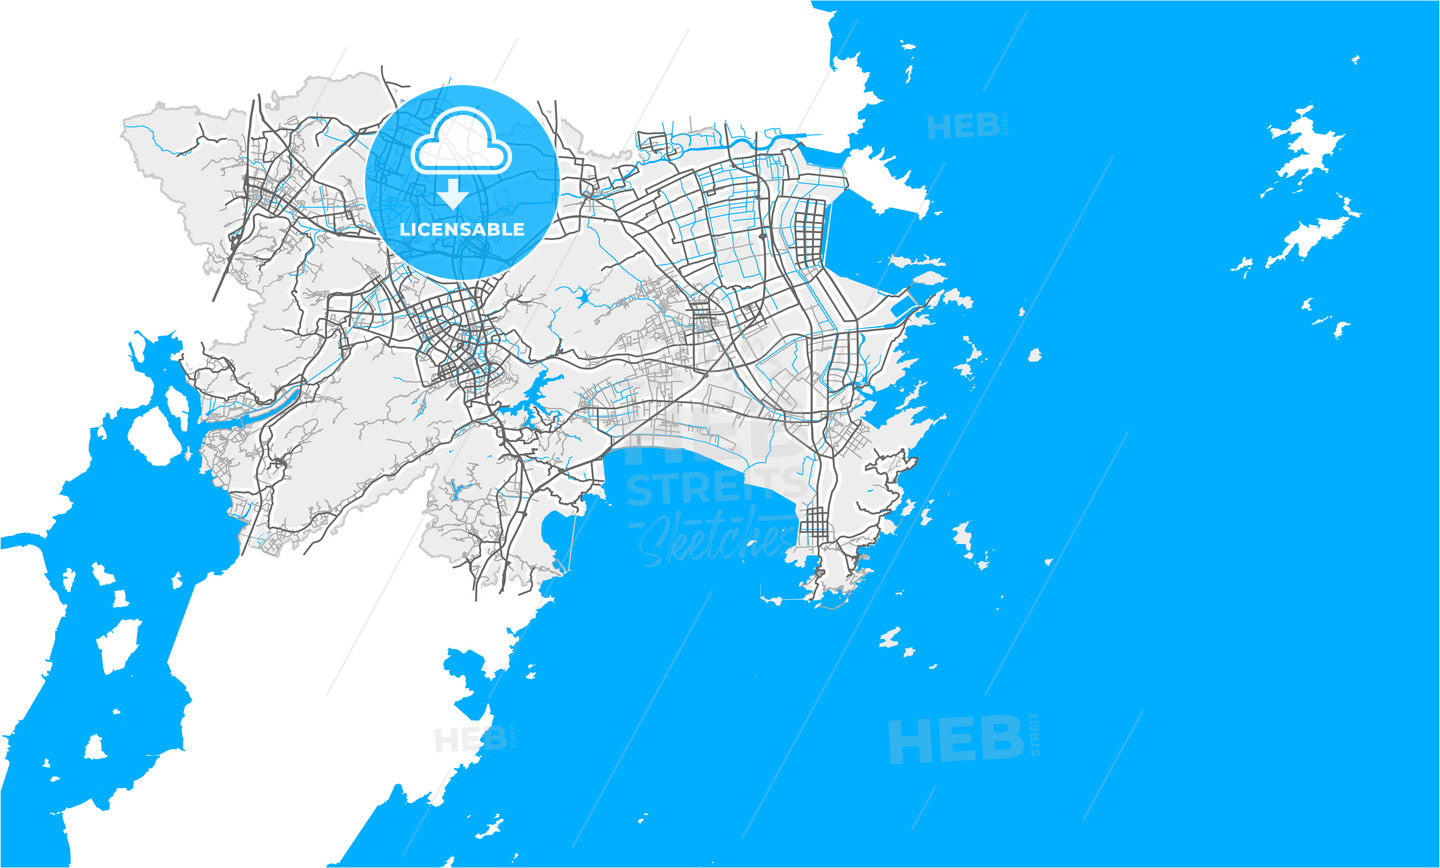 Wenling, Zhejiang, China, high quality vector map